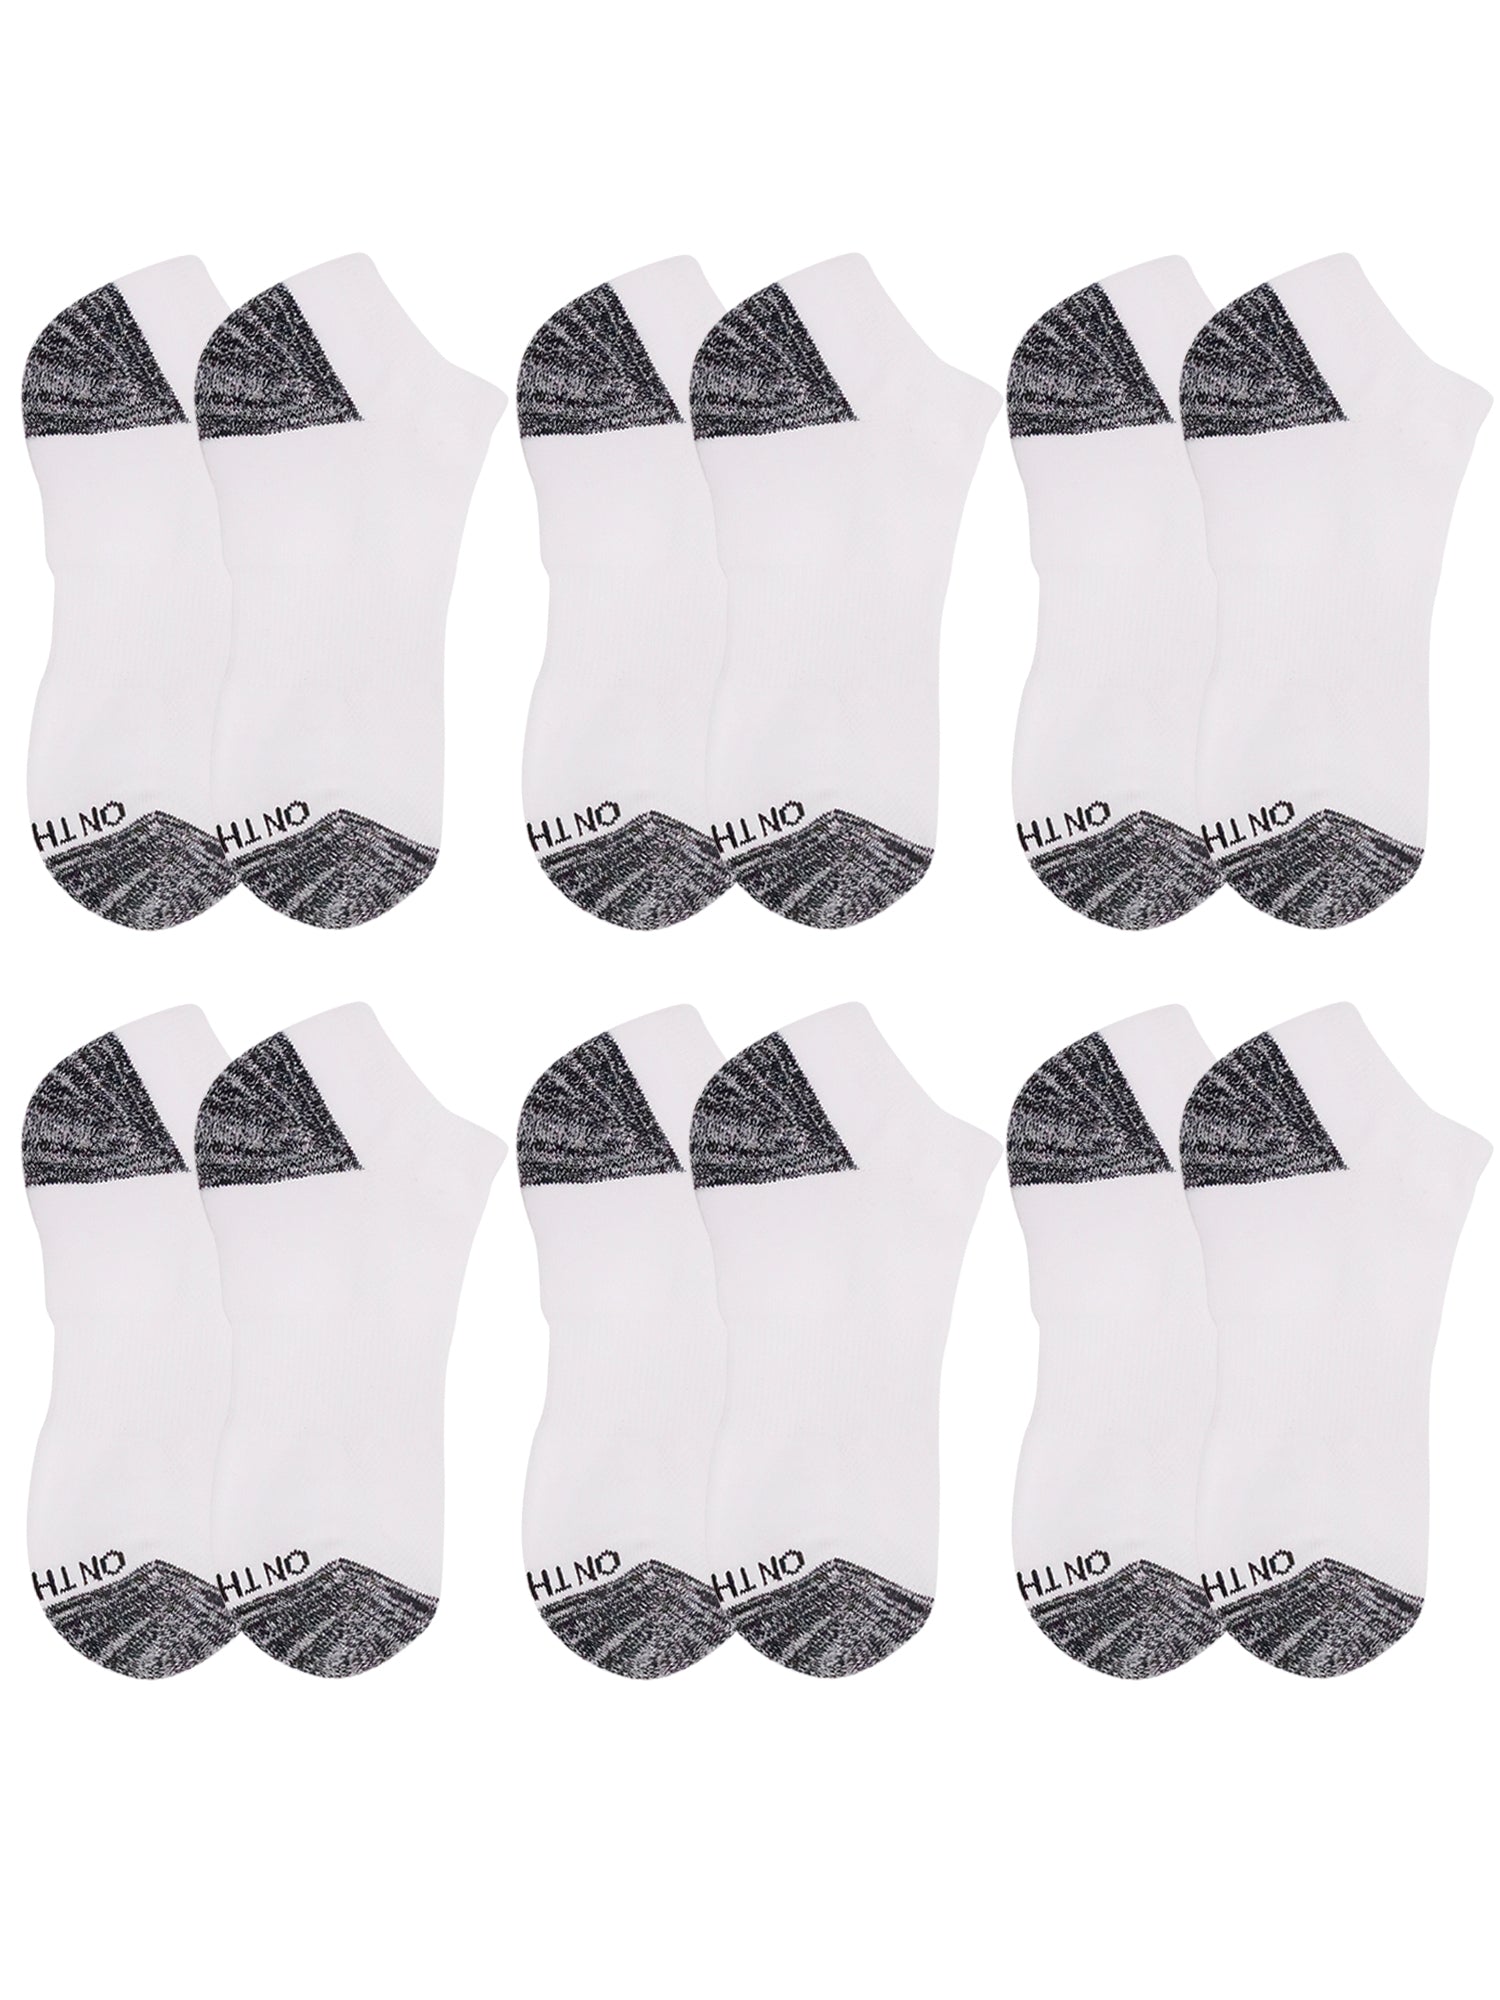 Cushion Fashion Low Cut Socks- Combo (6 Pair Pack)